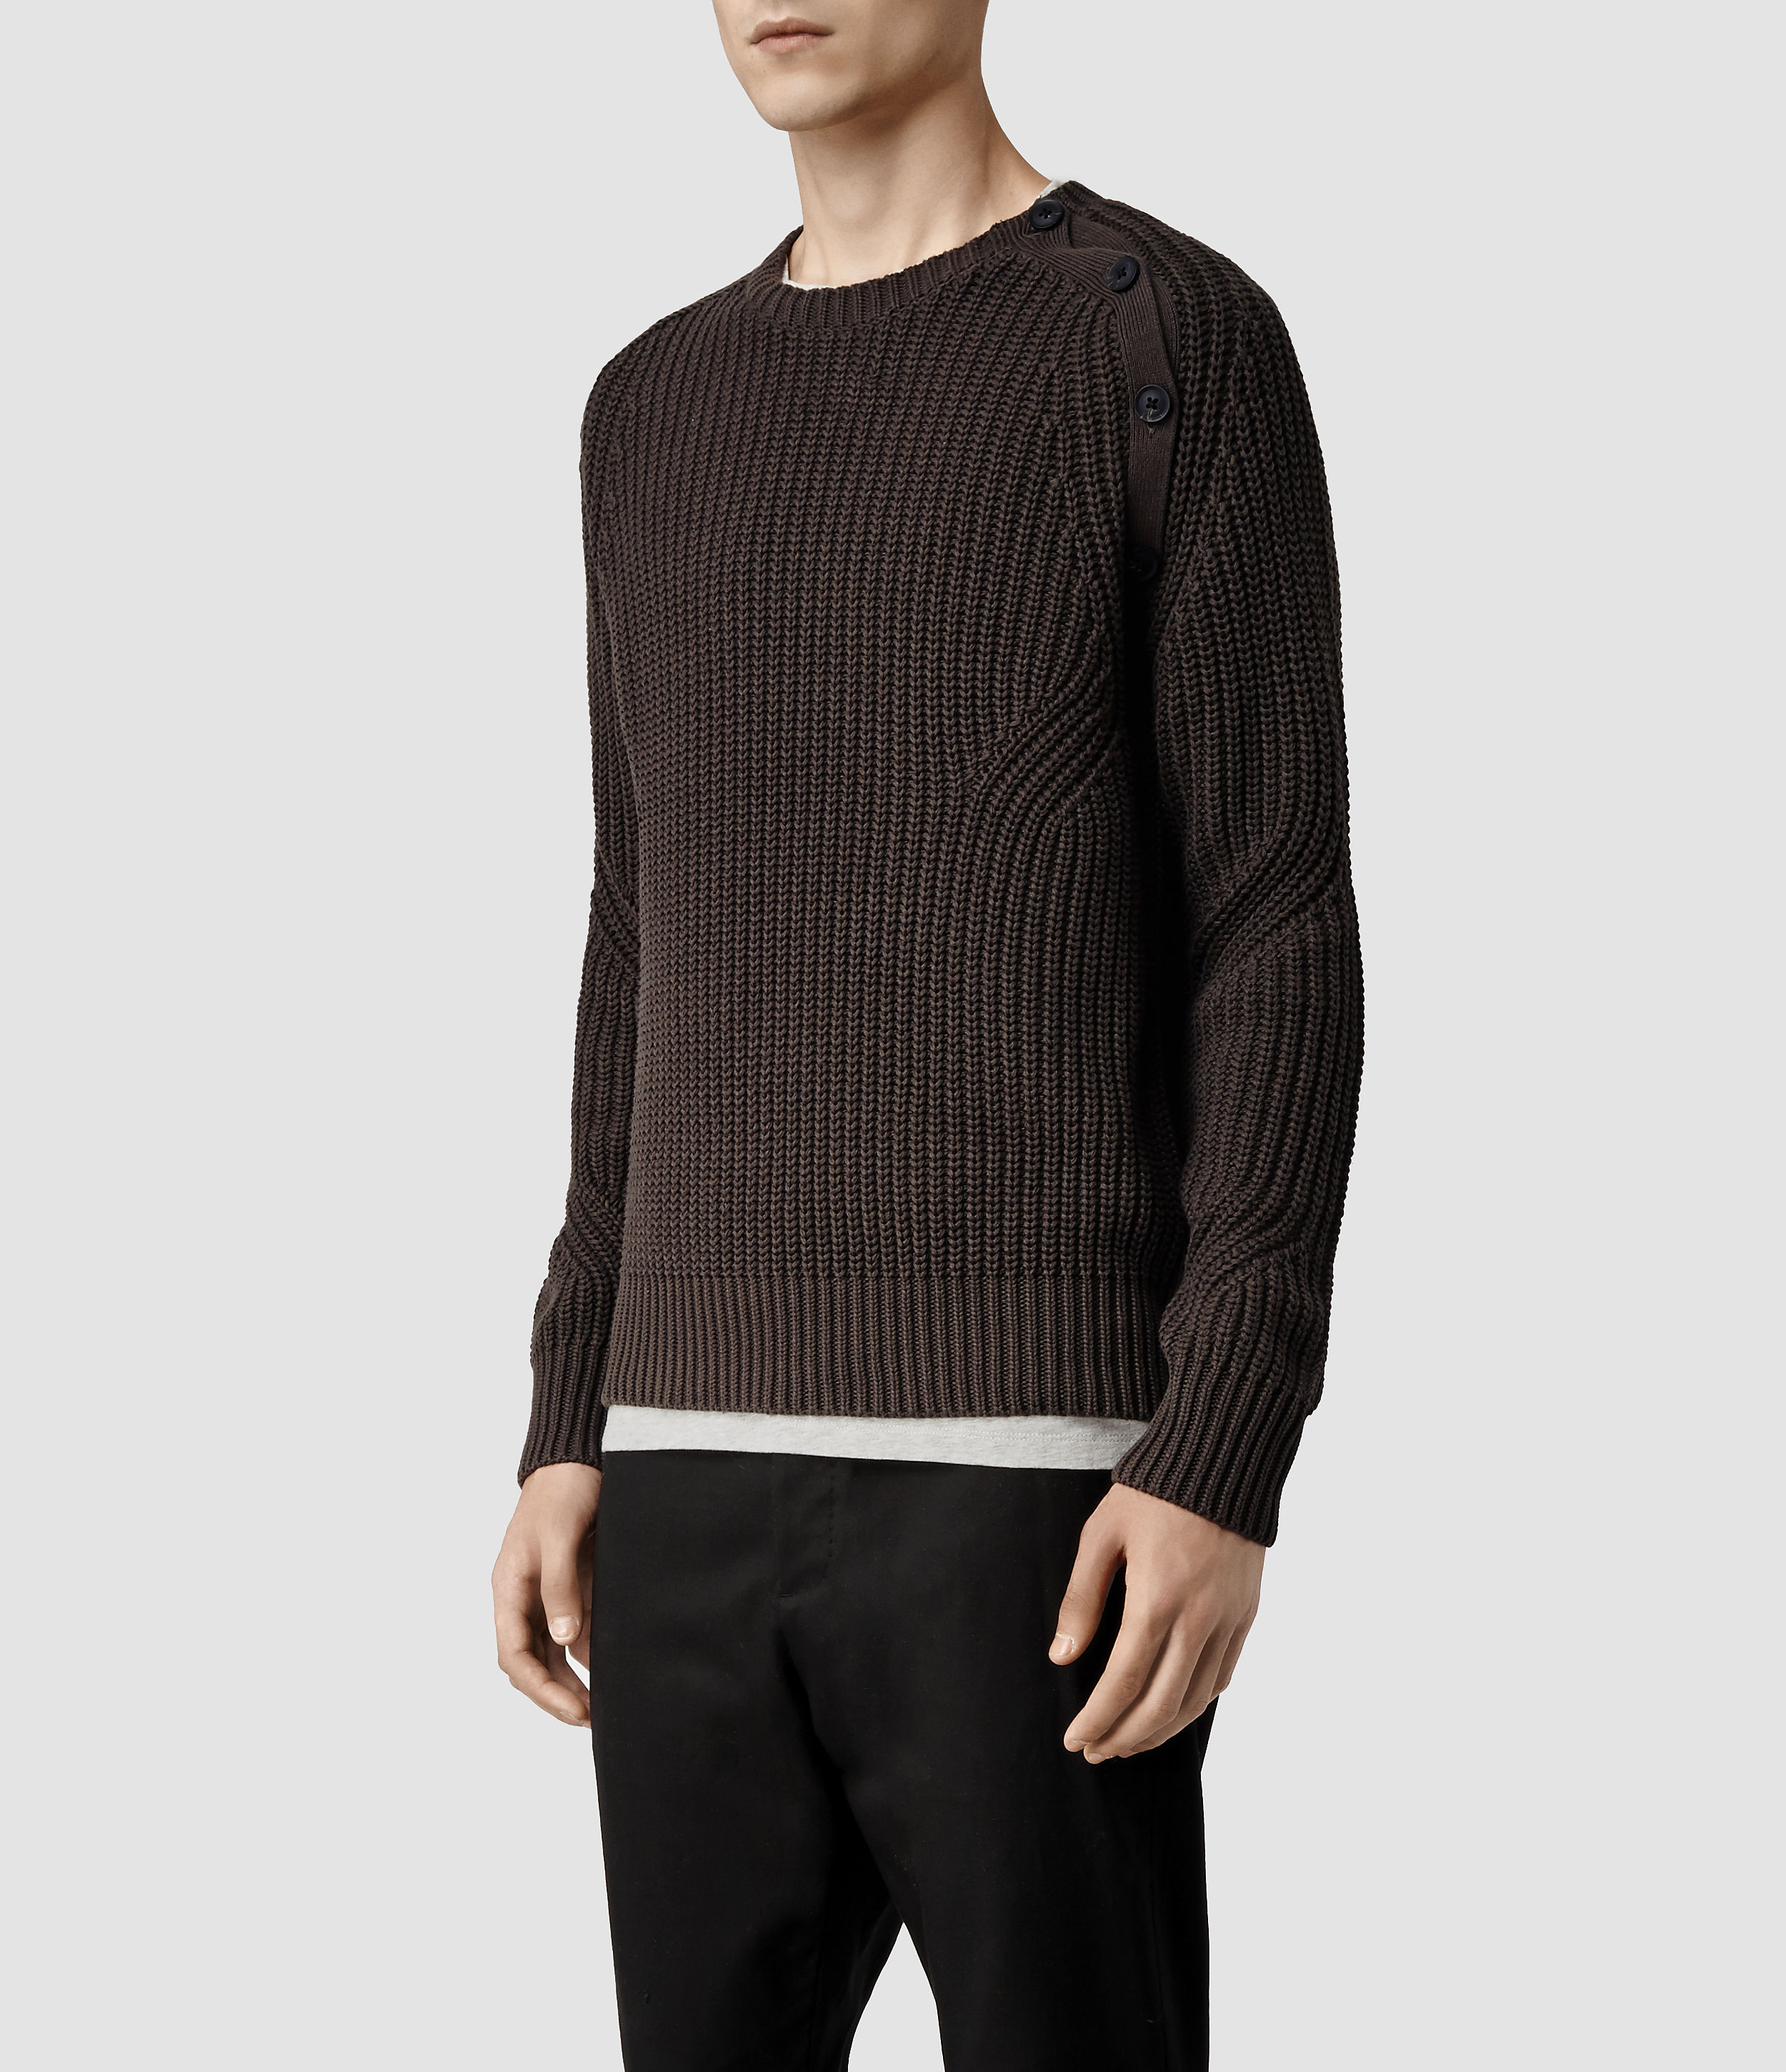 AllSaints Moat Buttoned Crew Sweater in Khaki (Gray) for Men - Lyst